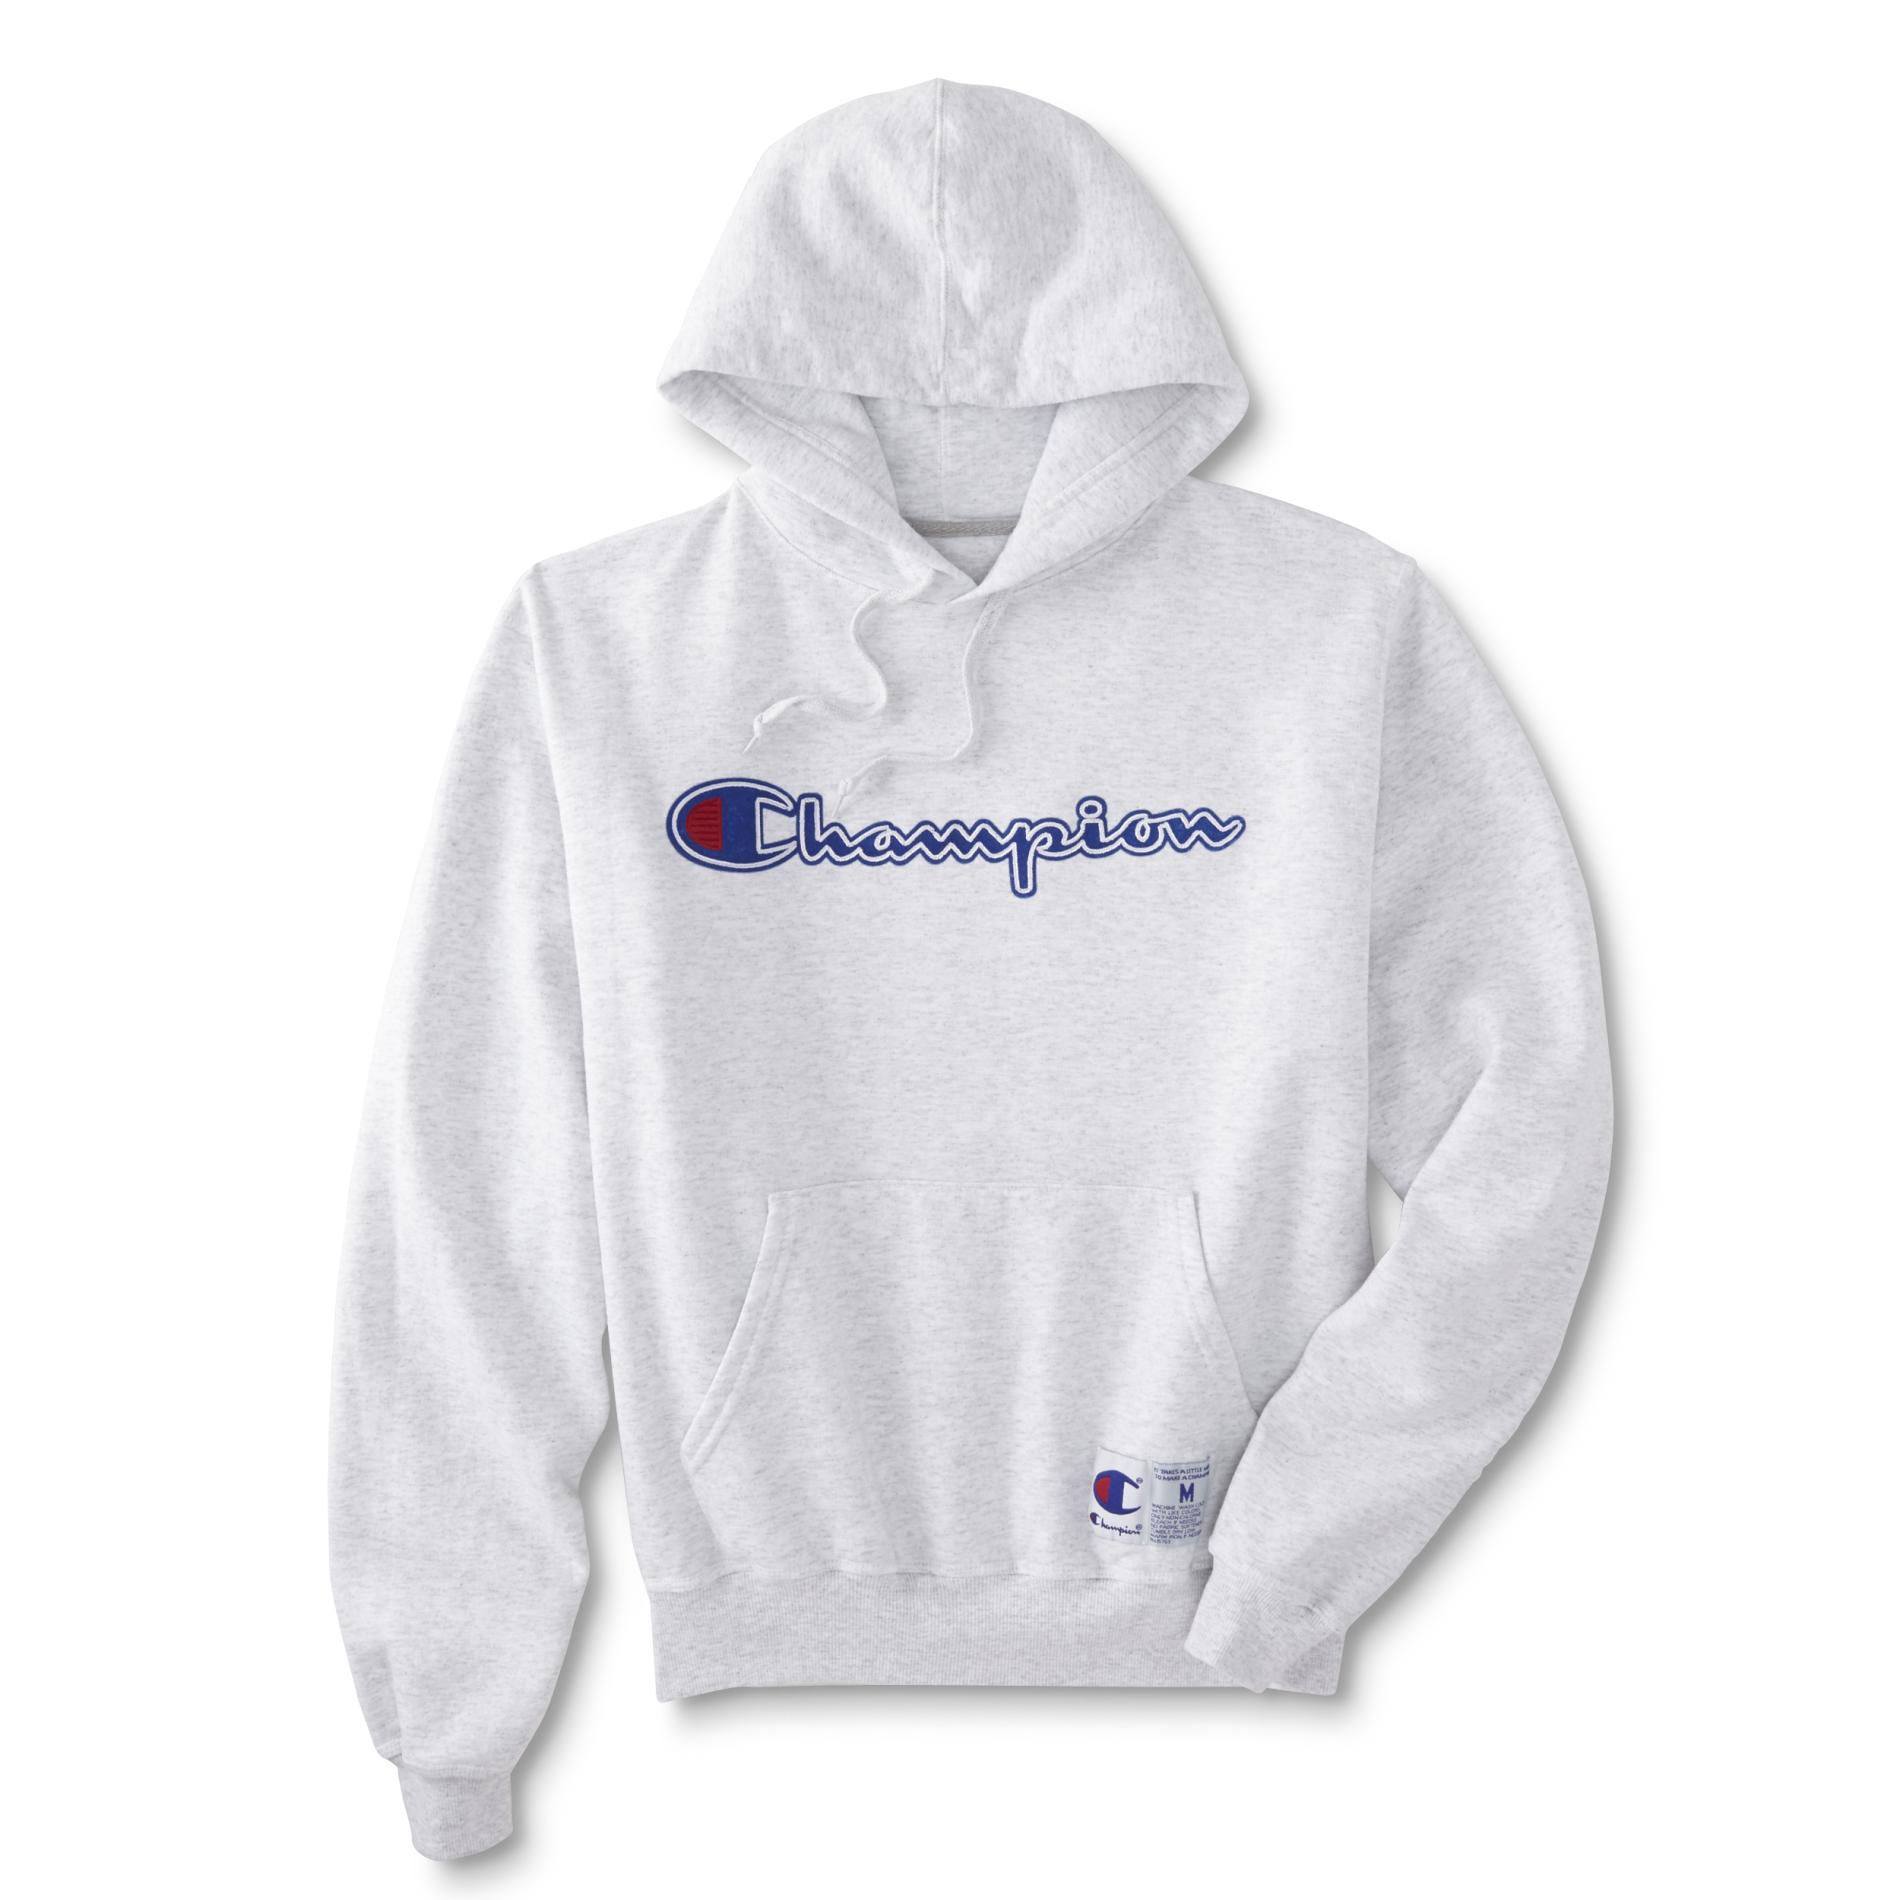 champion hoodie size medium